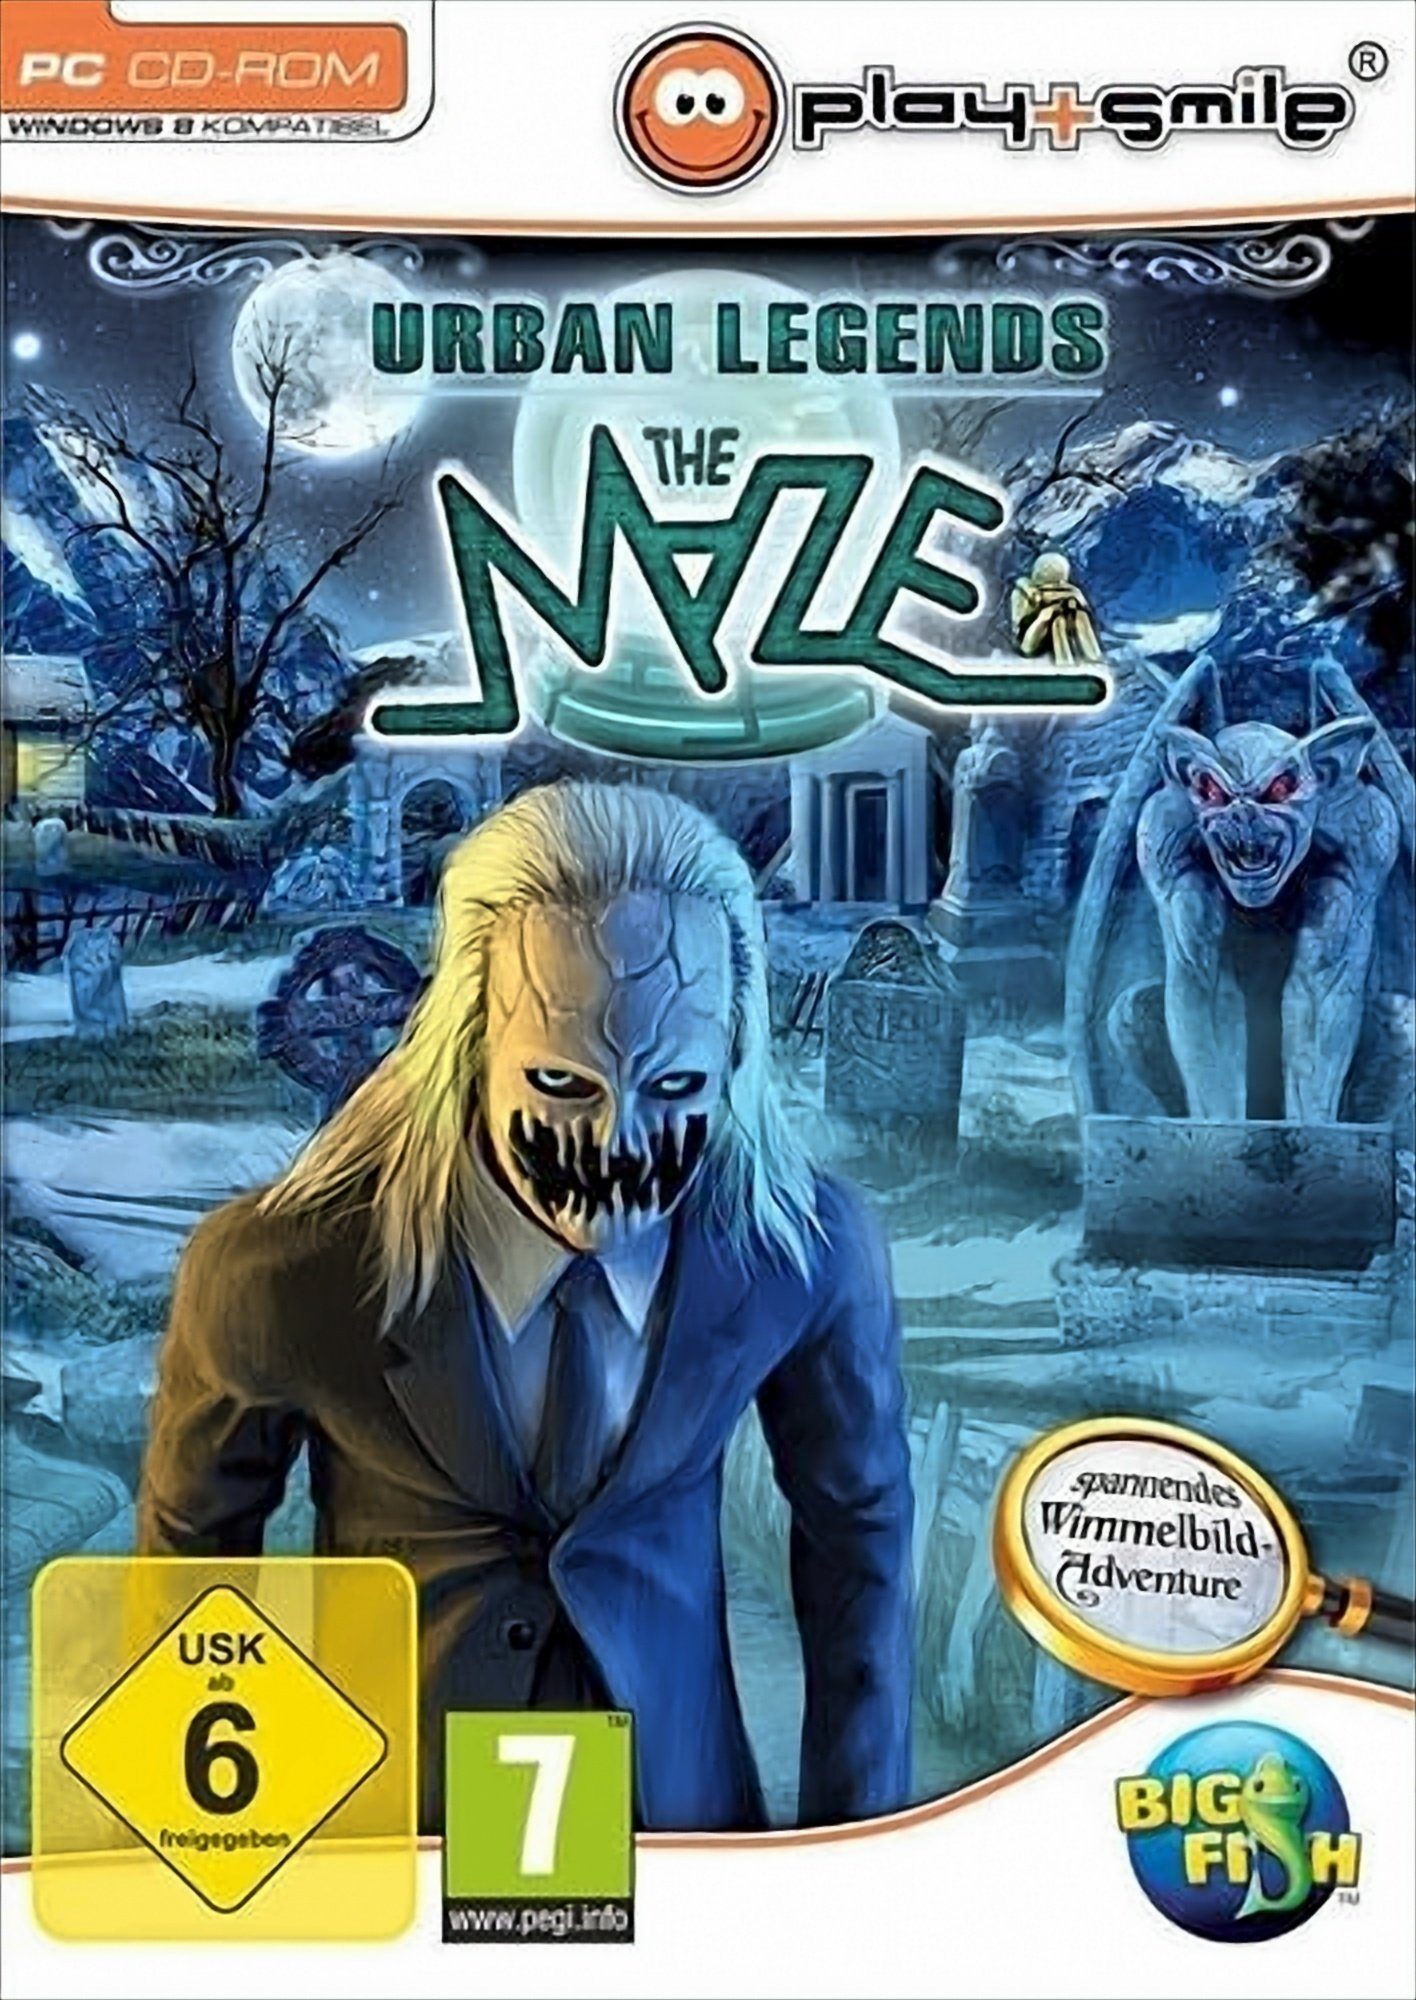 Urban Legends: The Maze PC